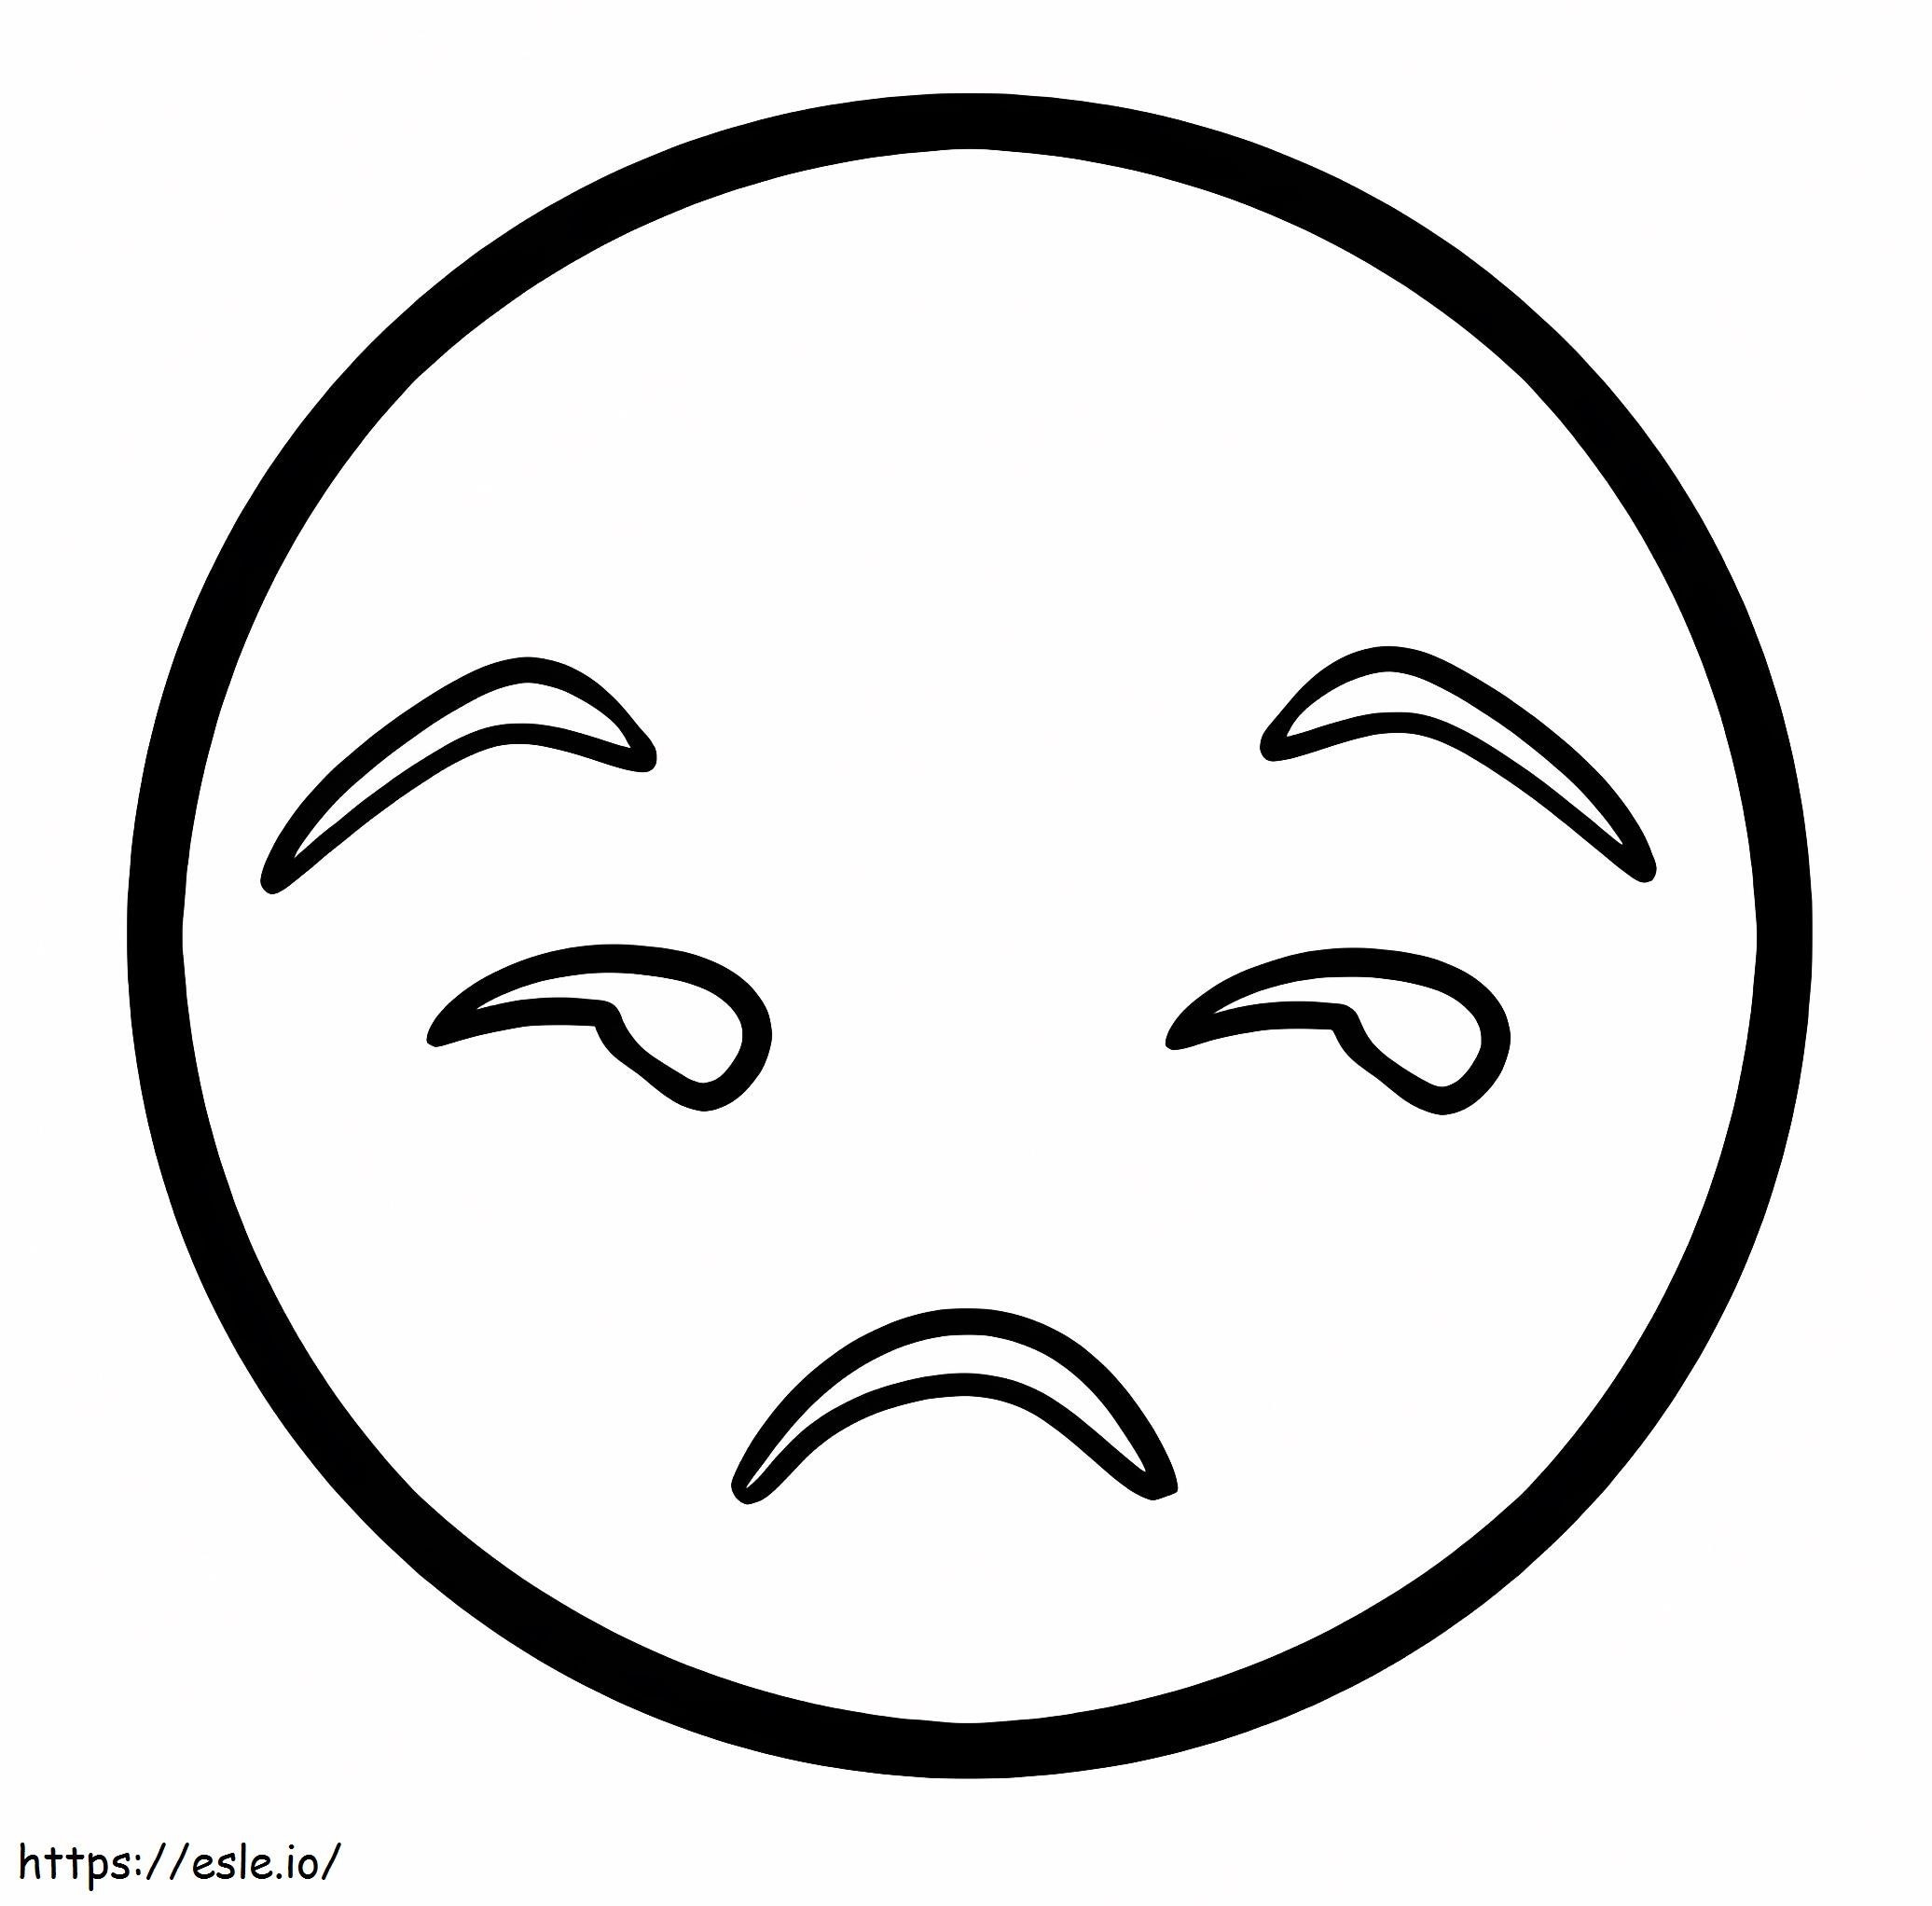 Annoyed Emoji coloring page